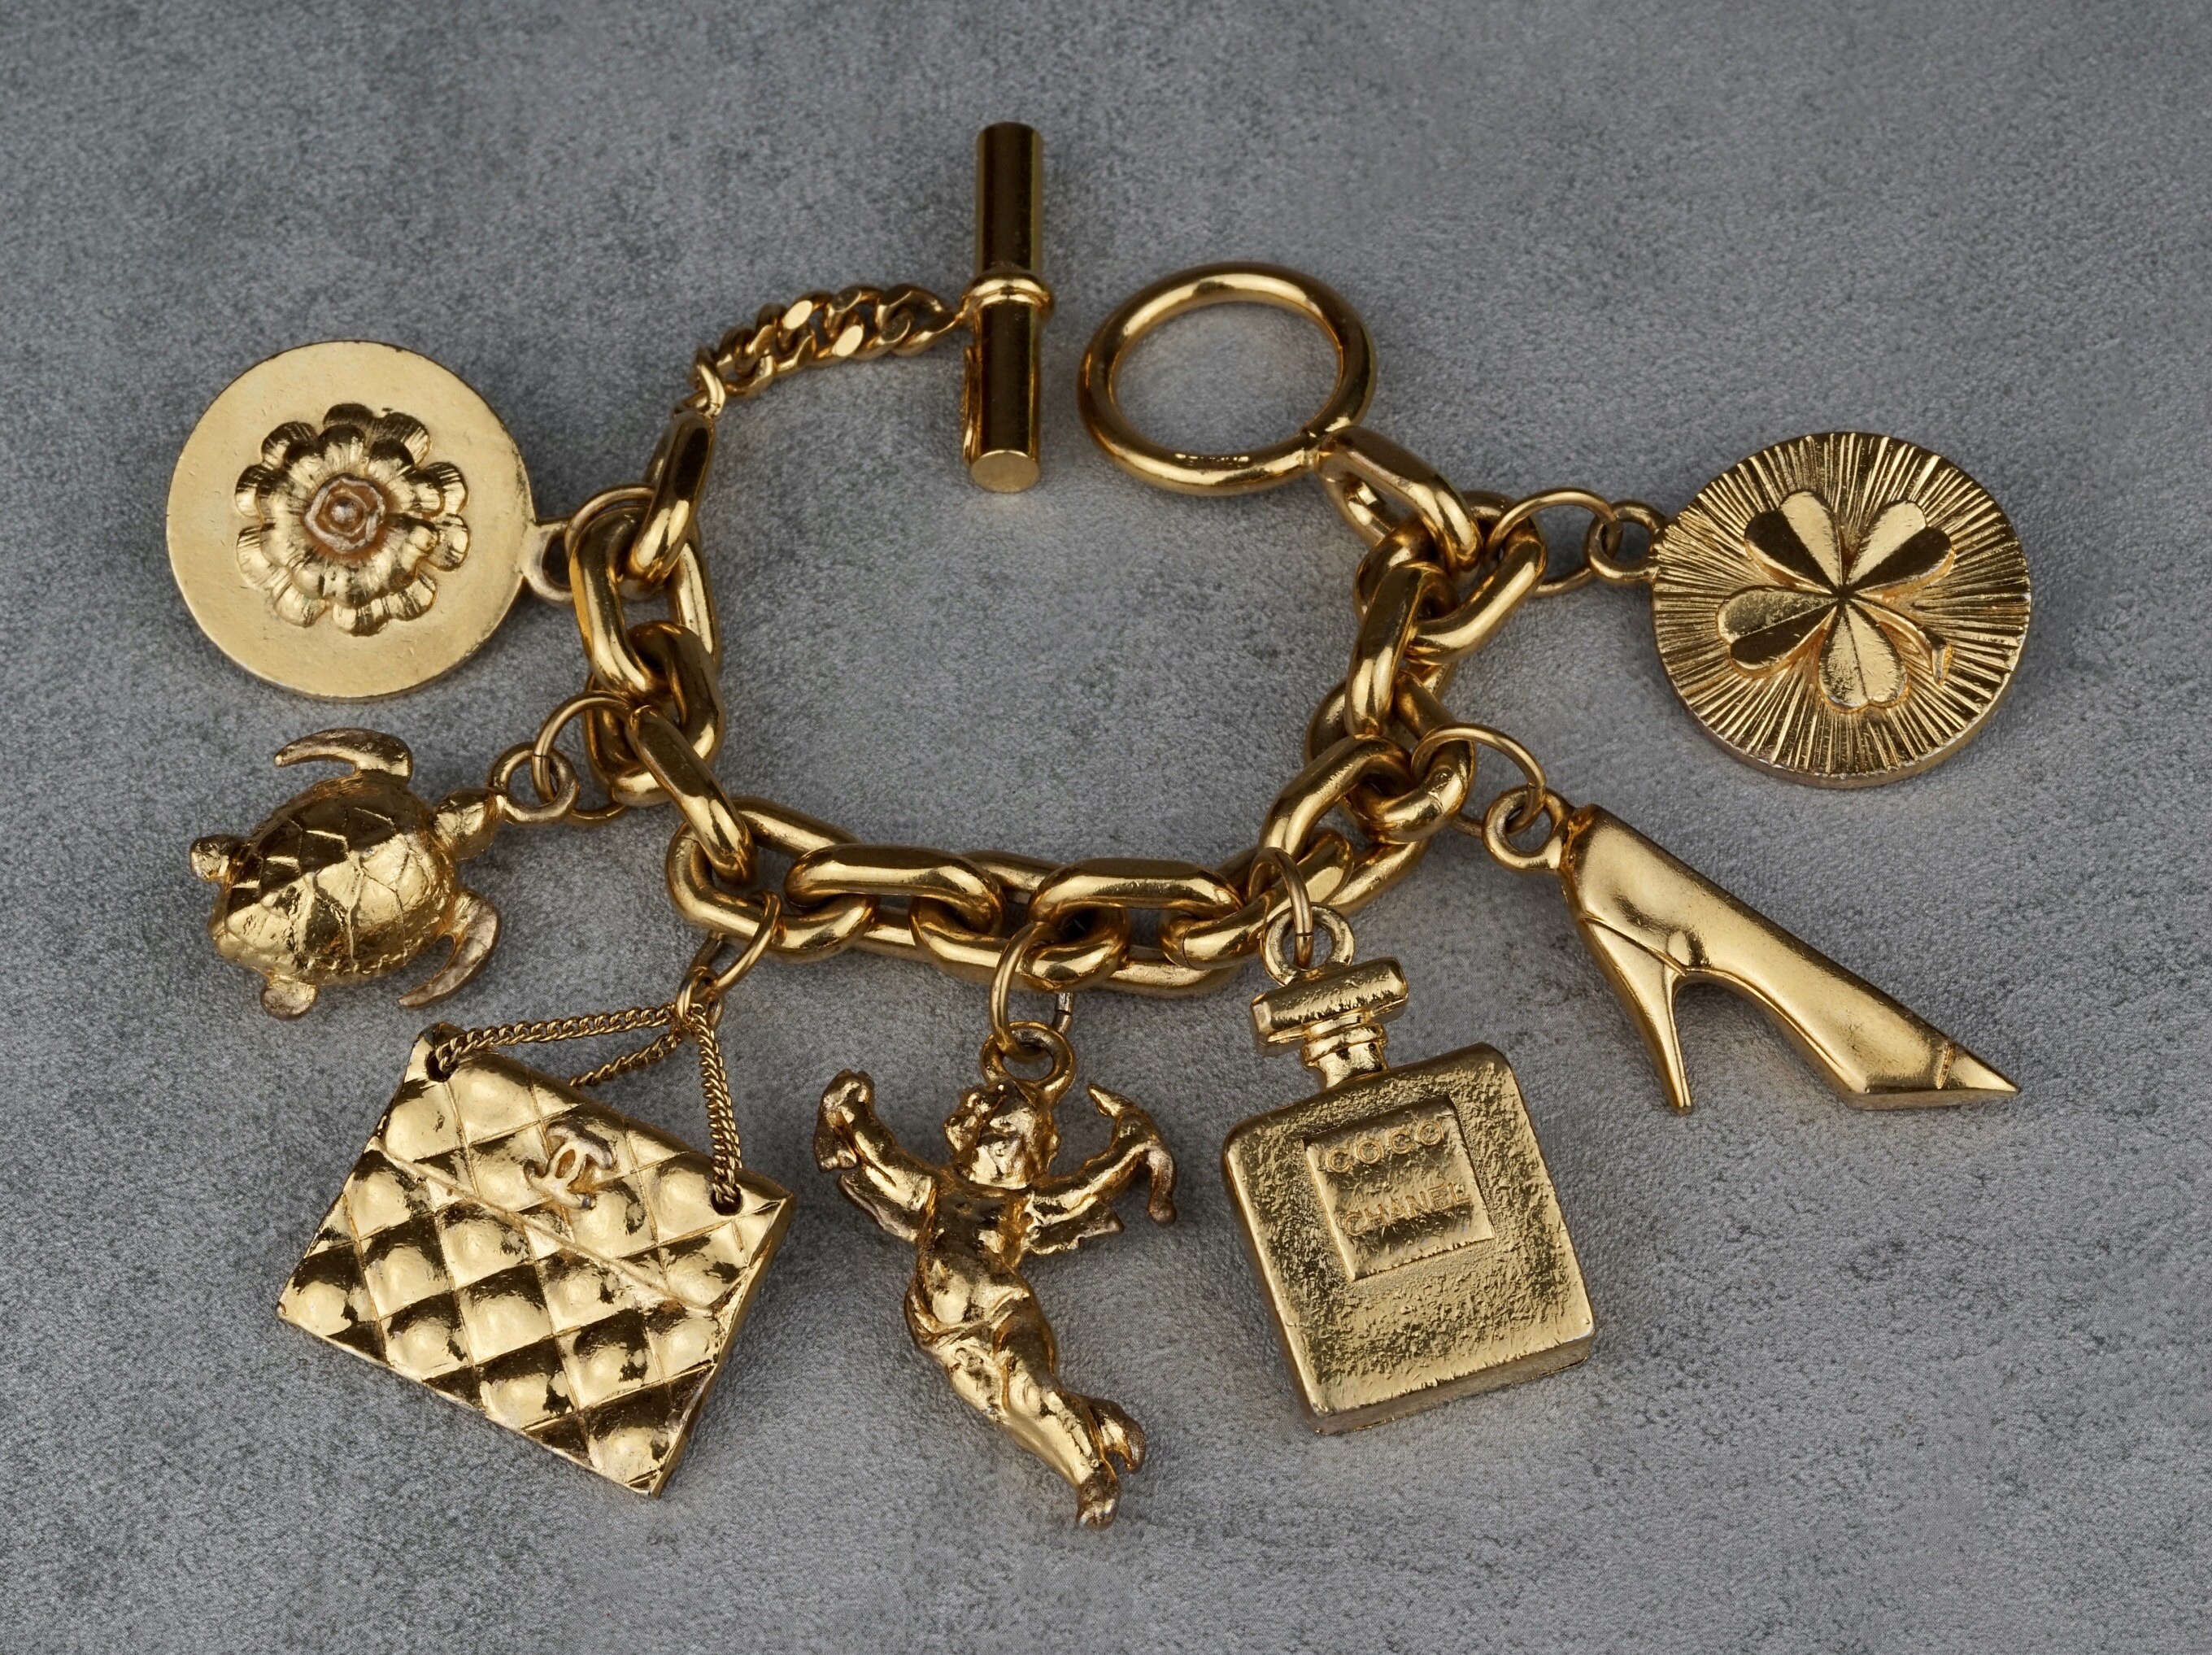 Vintage Avon Gold Plated Charm Bracelet